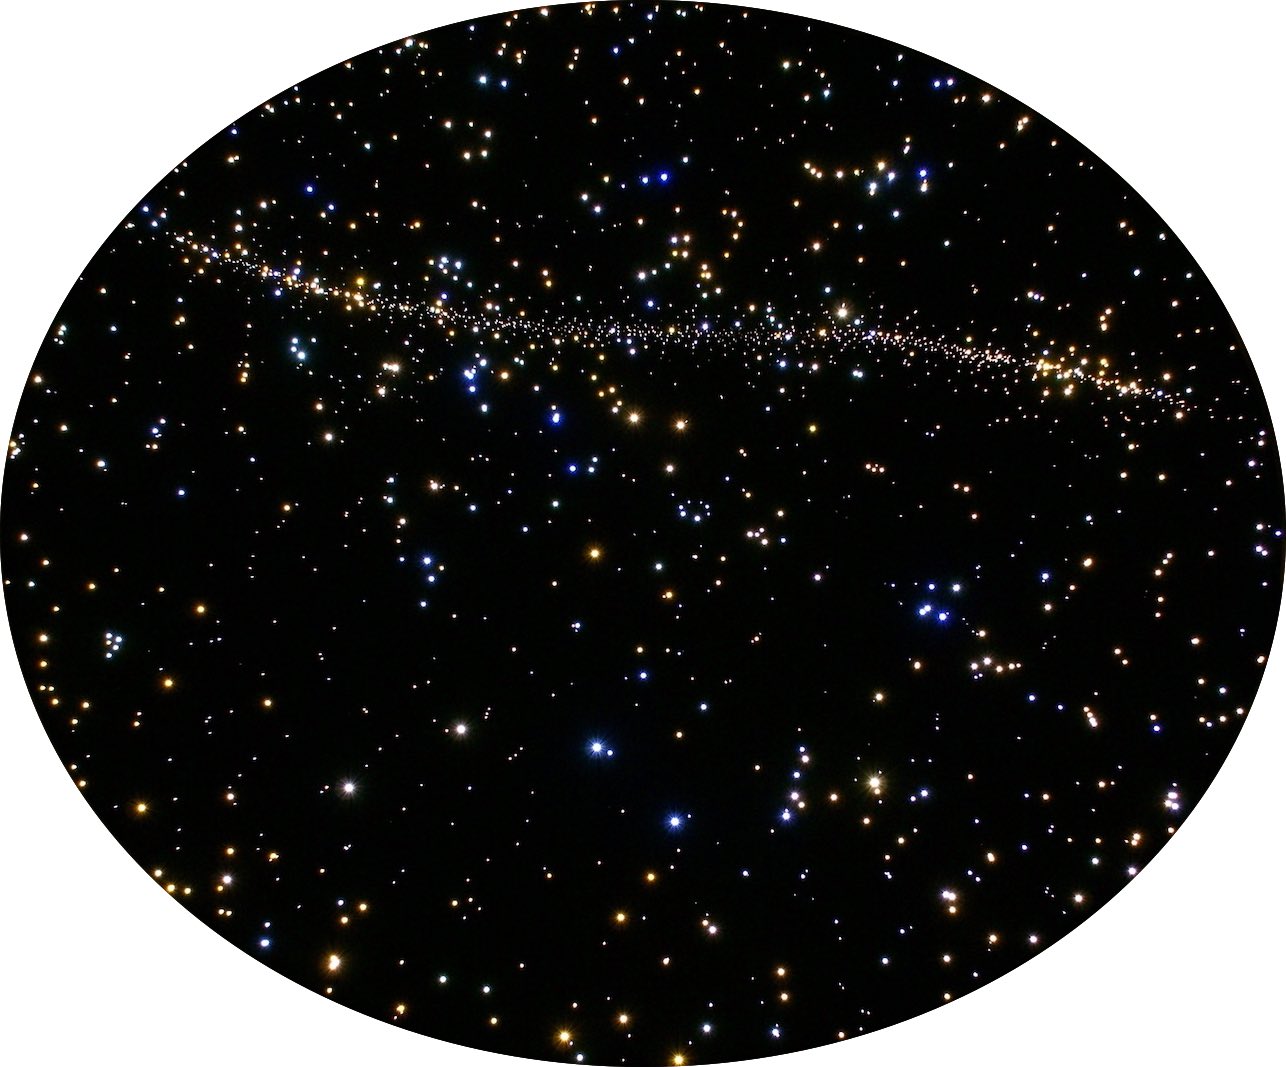 fiber-optic-star-ceiling-panels-LED-lights-Starry-night-sky-twinkling-bedroom-fibre-galaxy-bathroom-design-boards